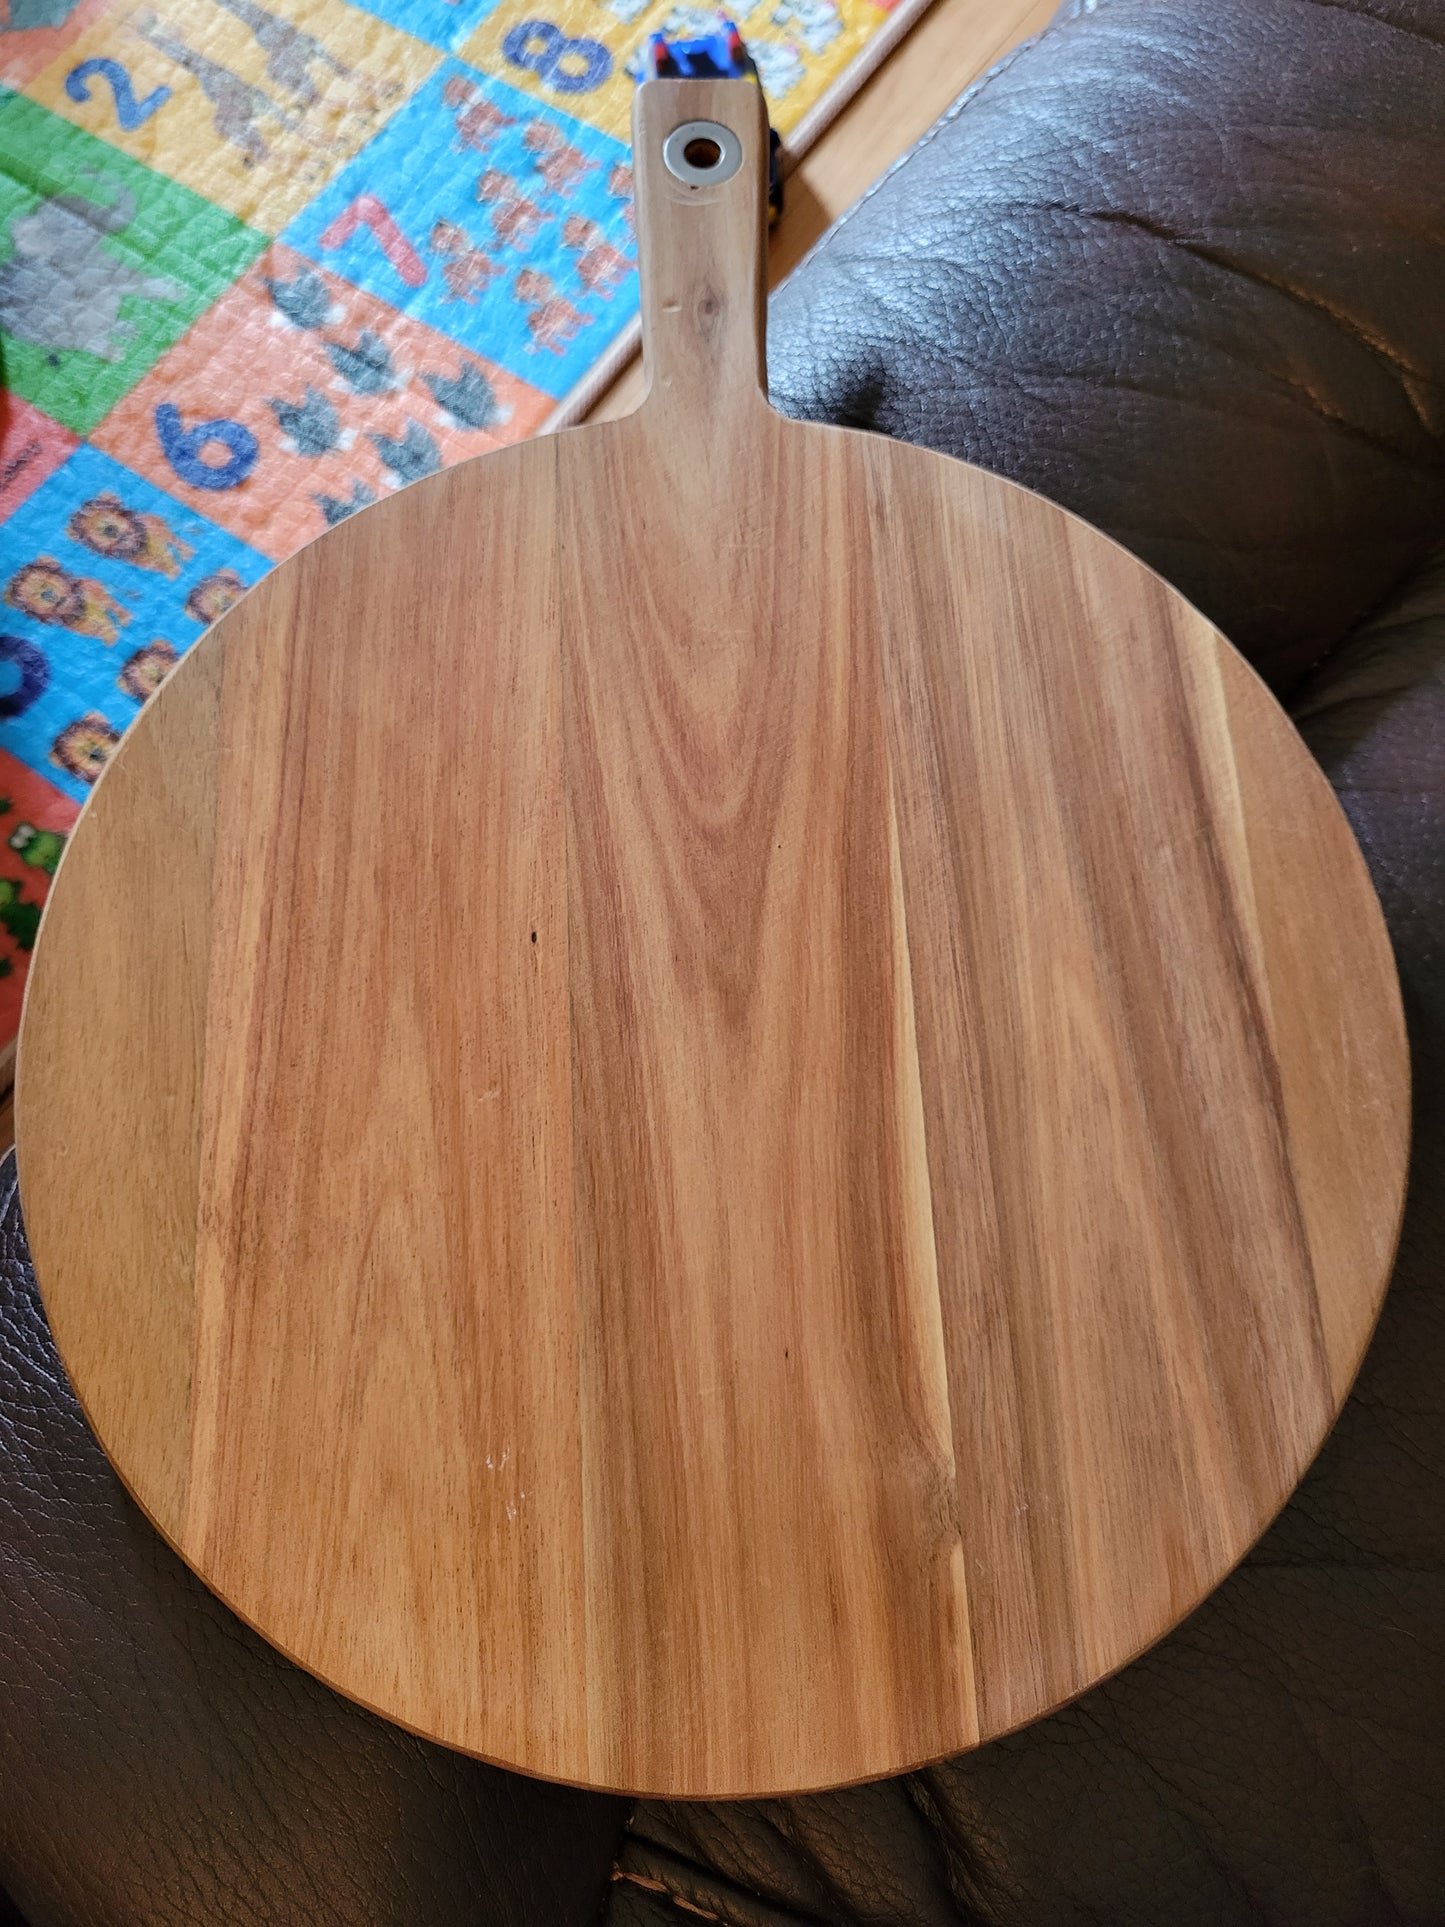 **SPECIAL** Acacia Wood Cutting Board - Custom Engraved